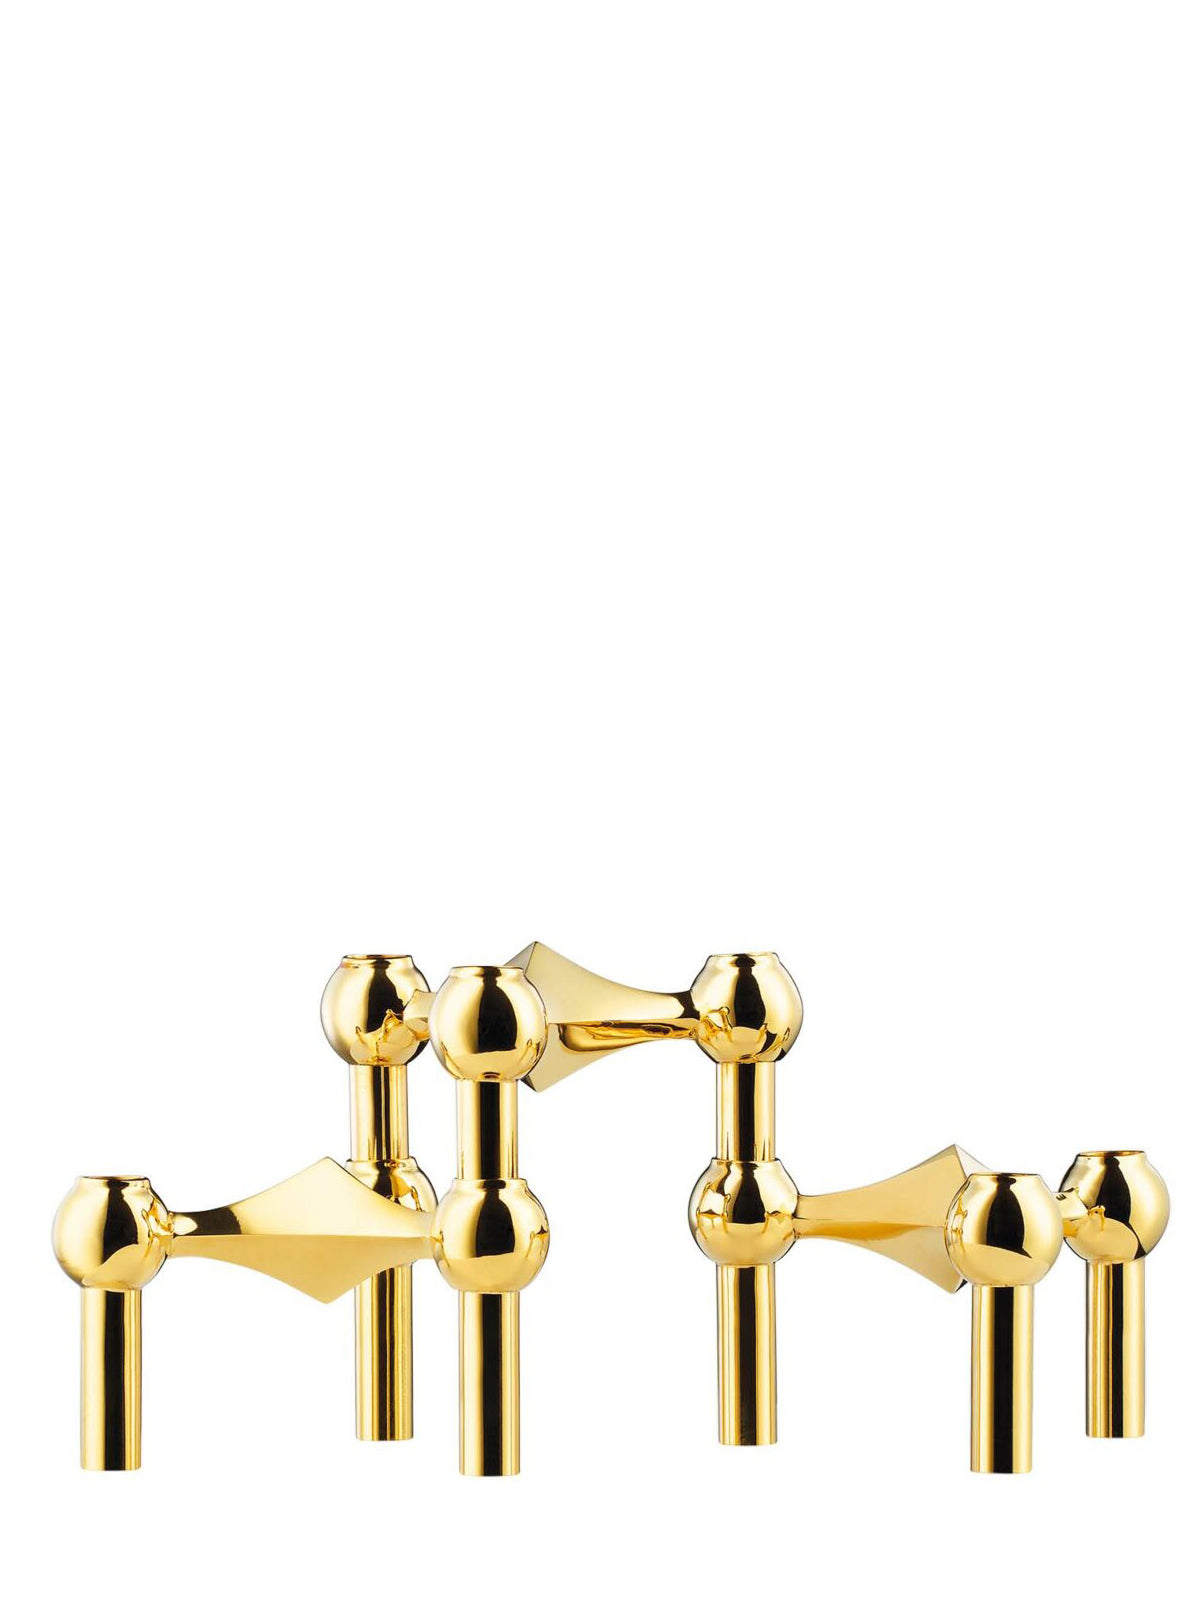 STOFF Nagel candle holder set w/3 pcs, solid brass